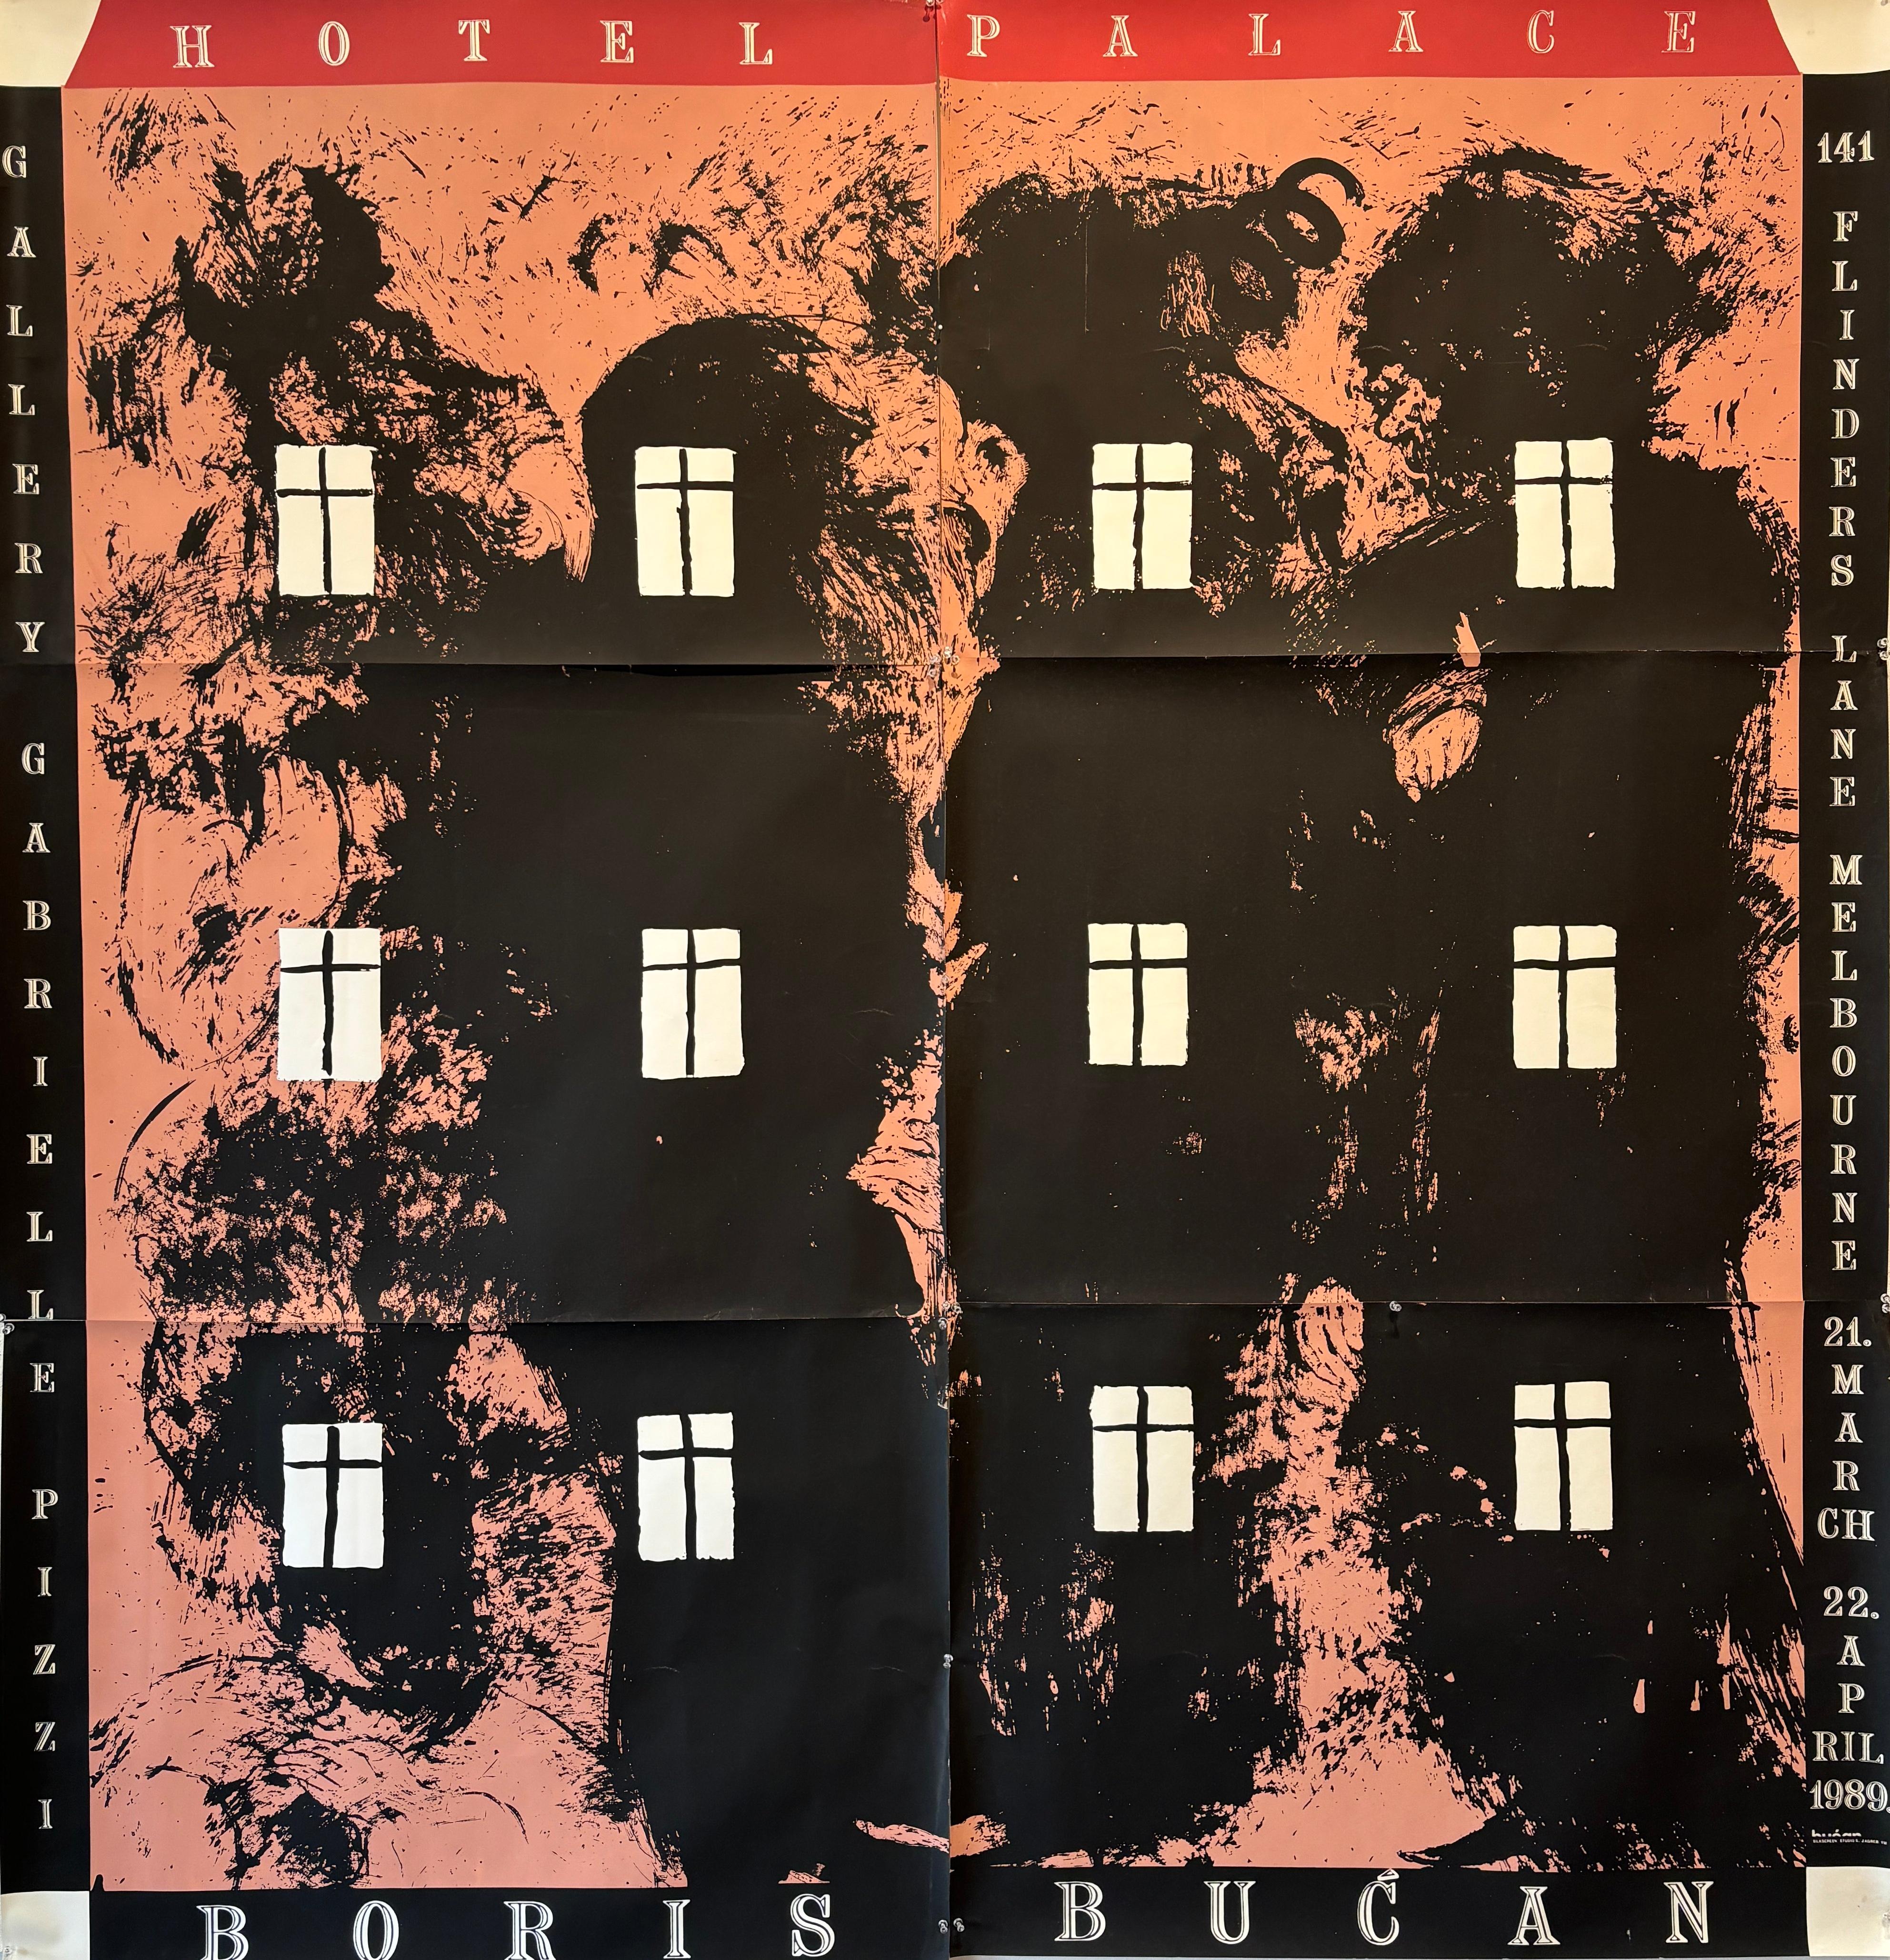 Paper Original Silk-Screen Poster by BORIS BUCAN, 'HOTEL PALACE FLINDERS LANE GALLERY' For Sale